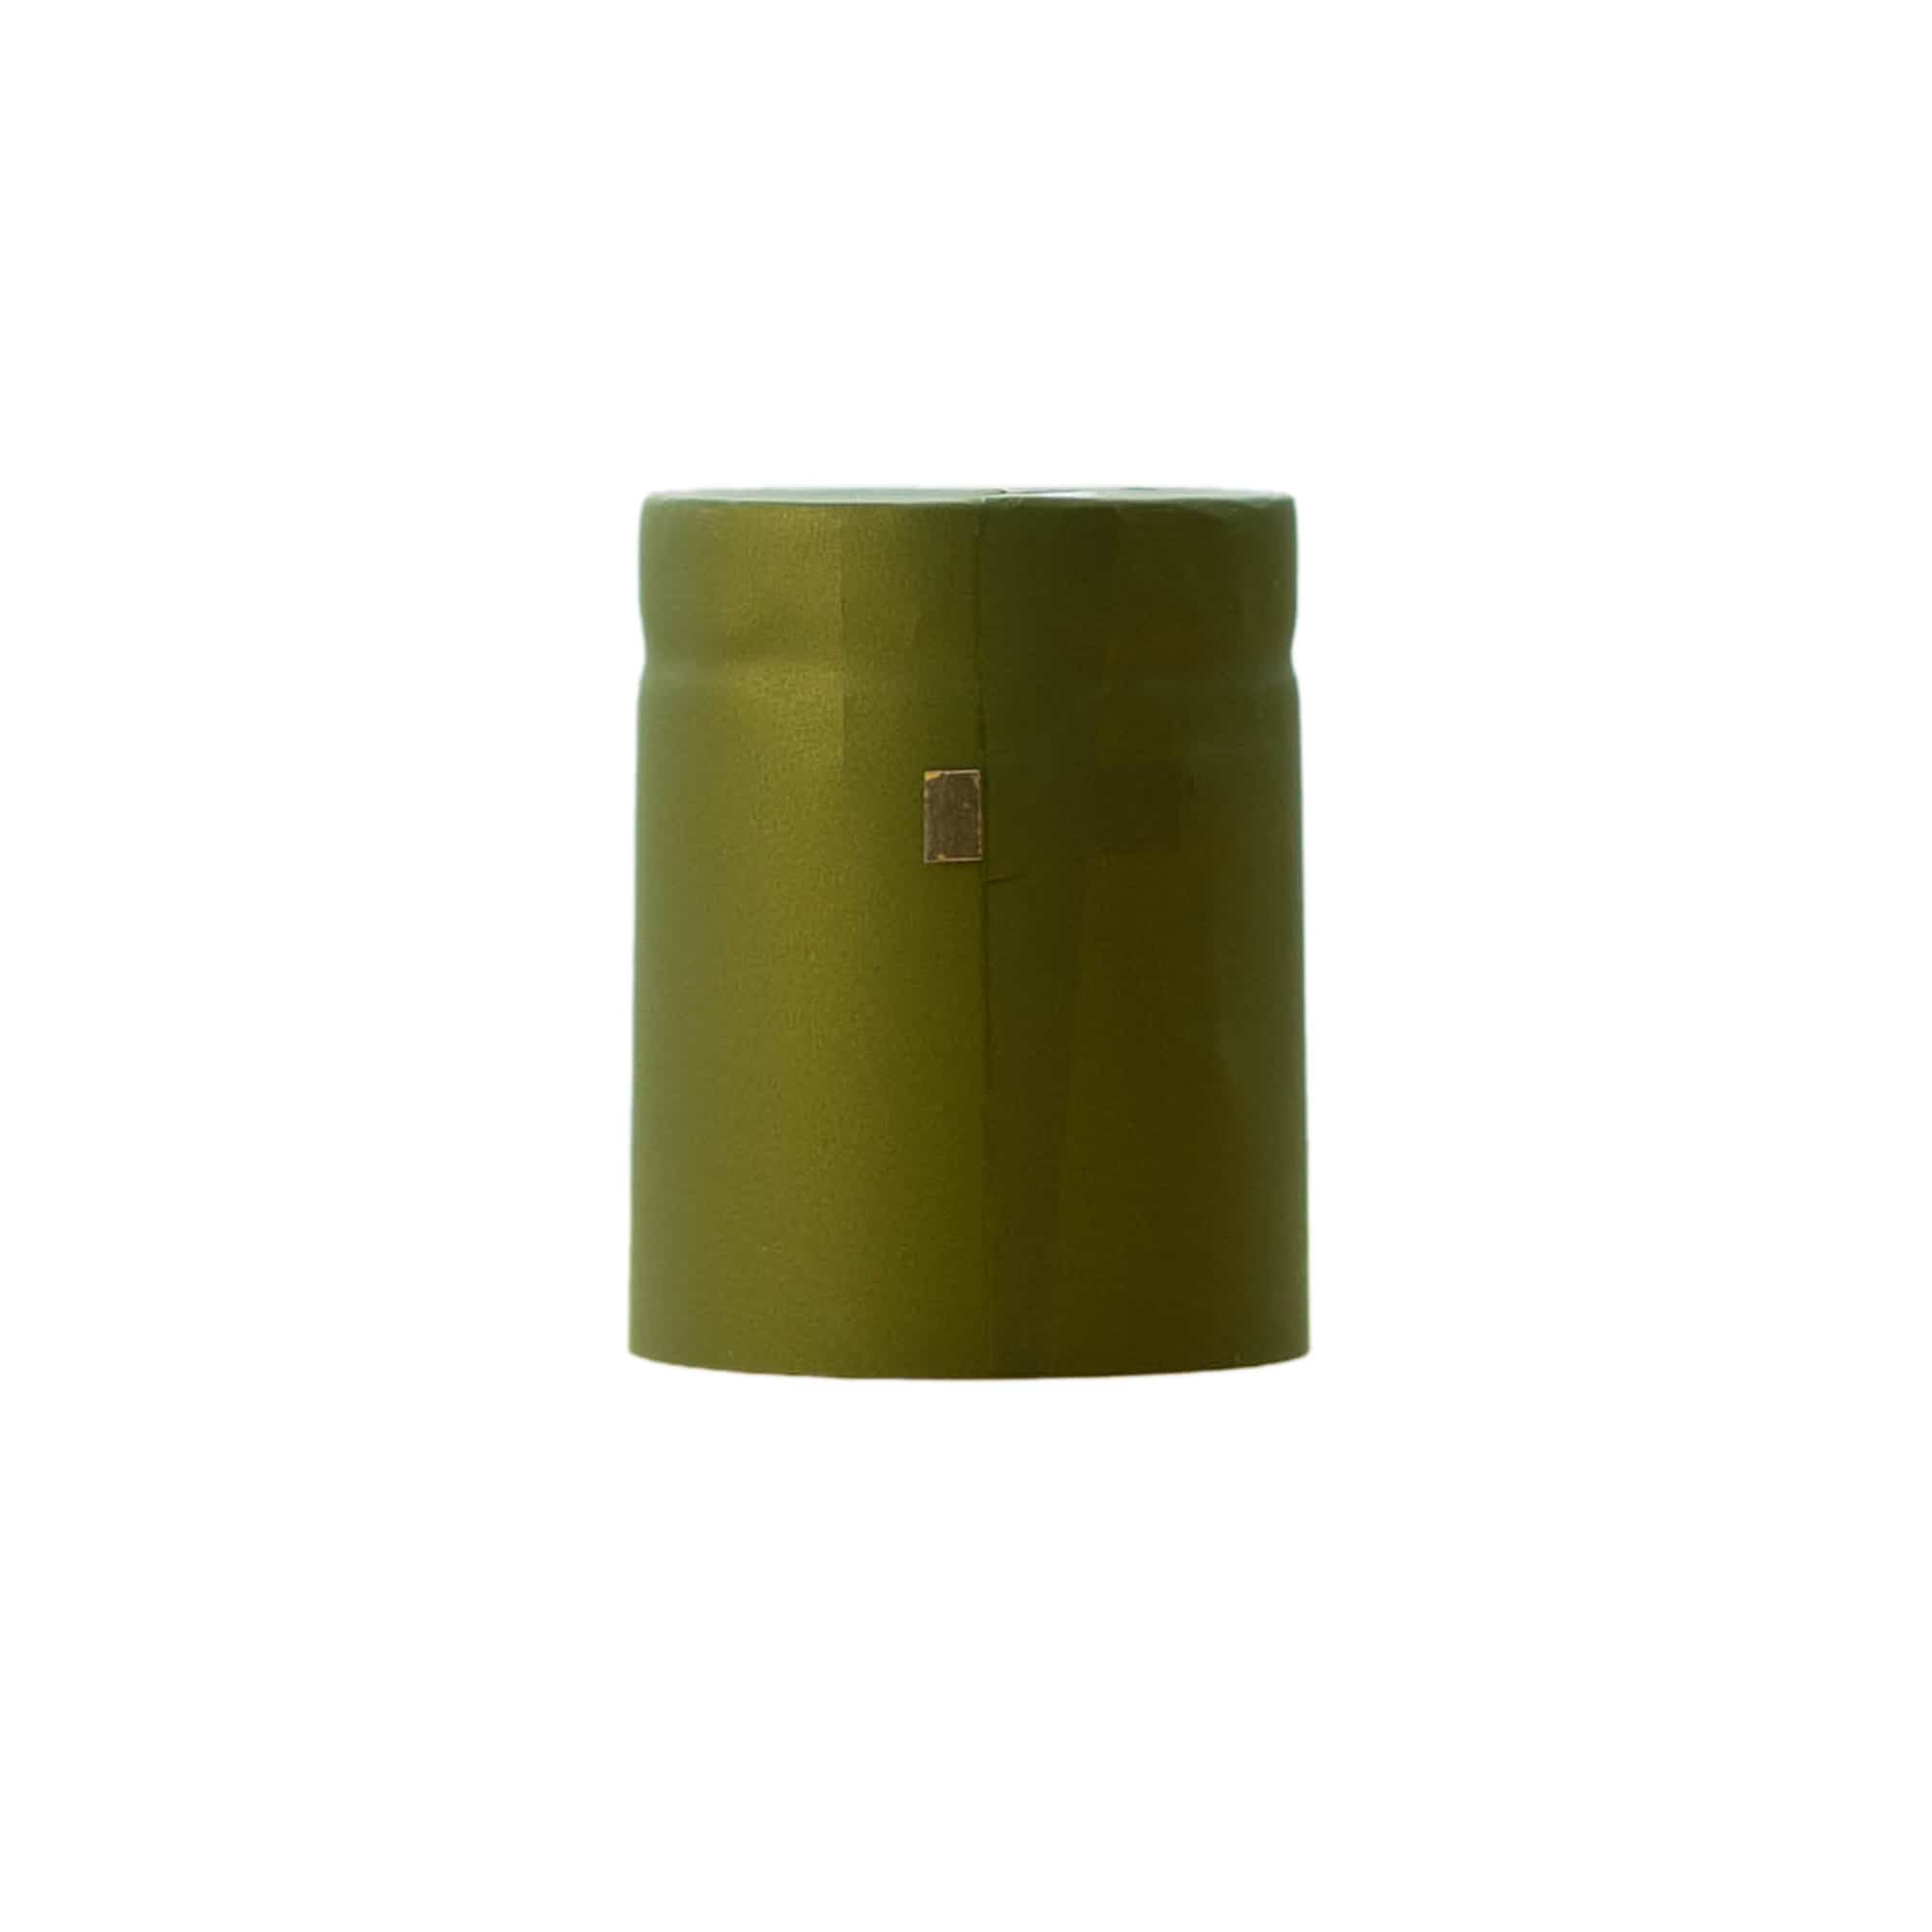 Capsula termoretraibile 32x41, plastica PVC, verde oliva